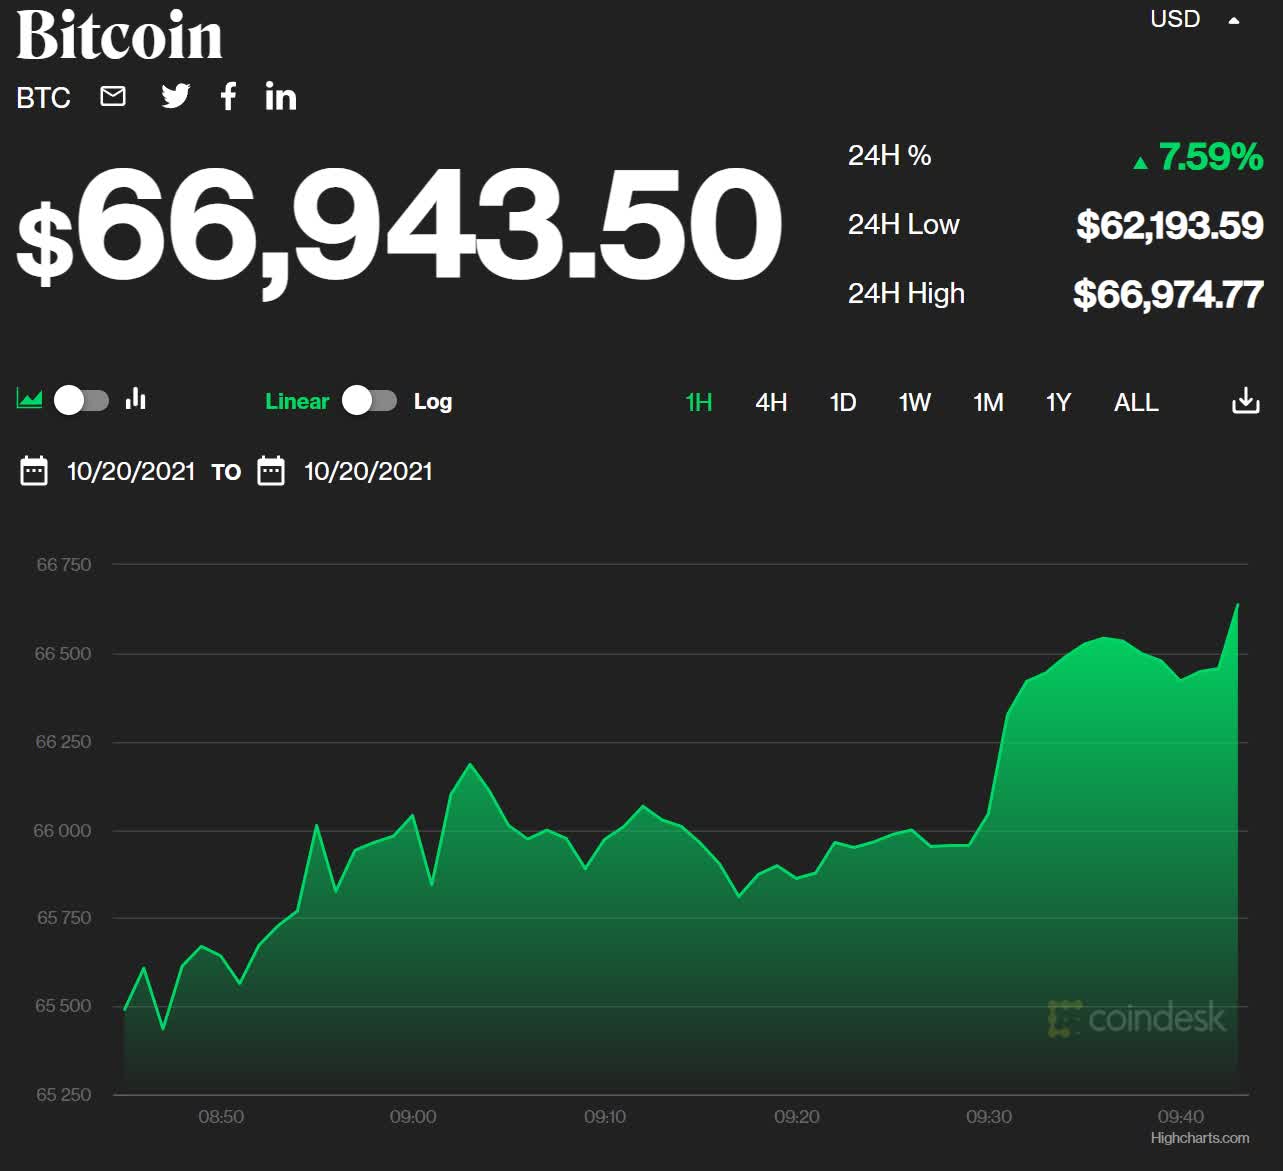 Bitcoin all time high количество транзакций биткоин в день